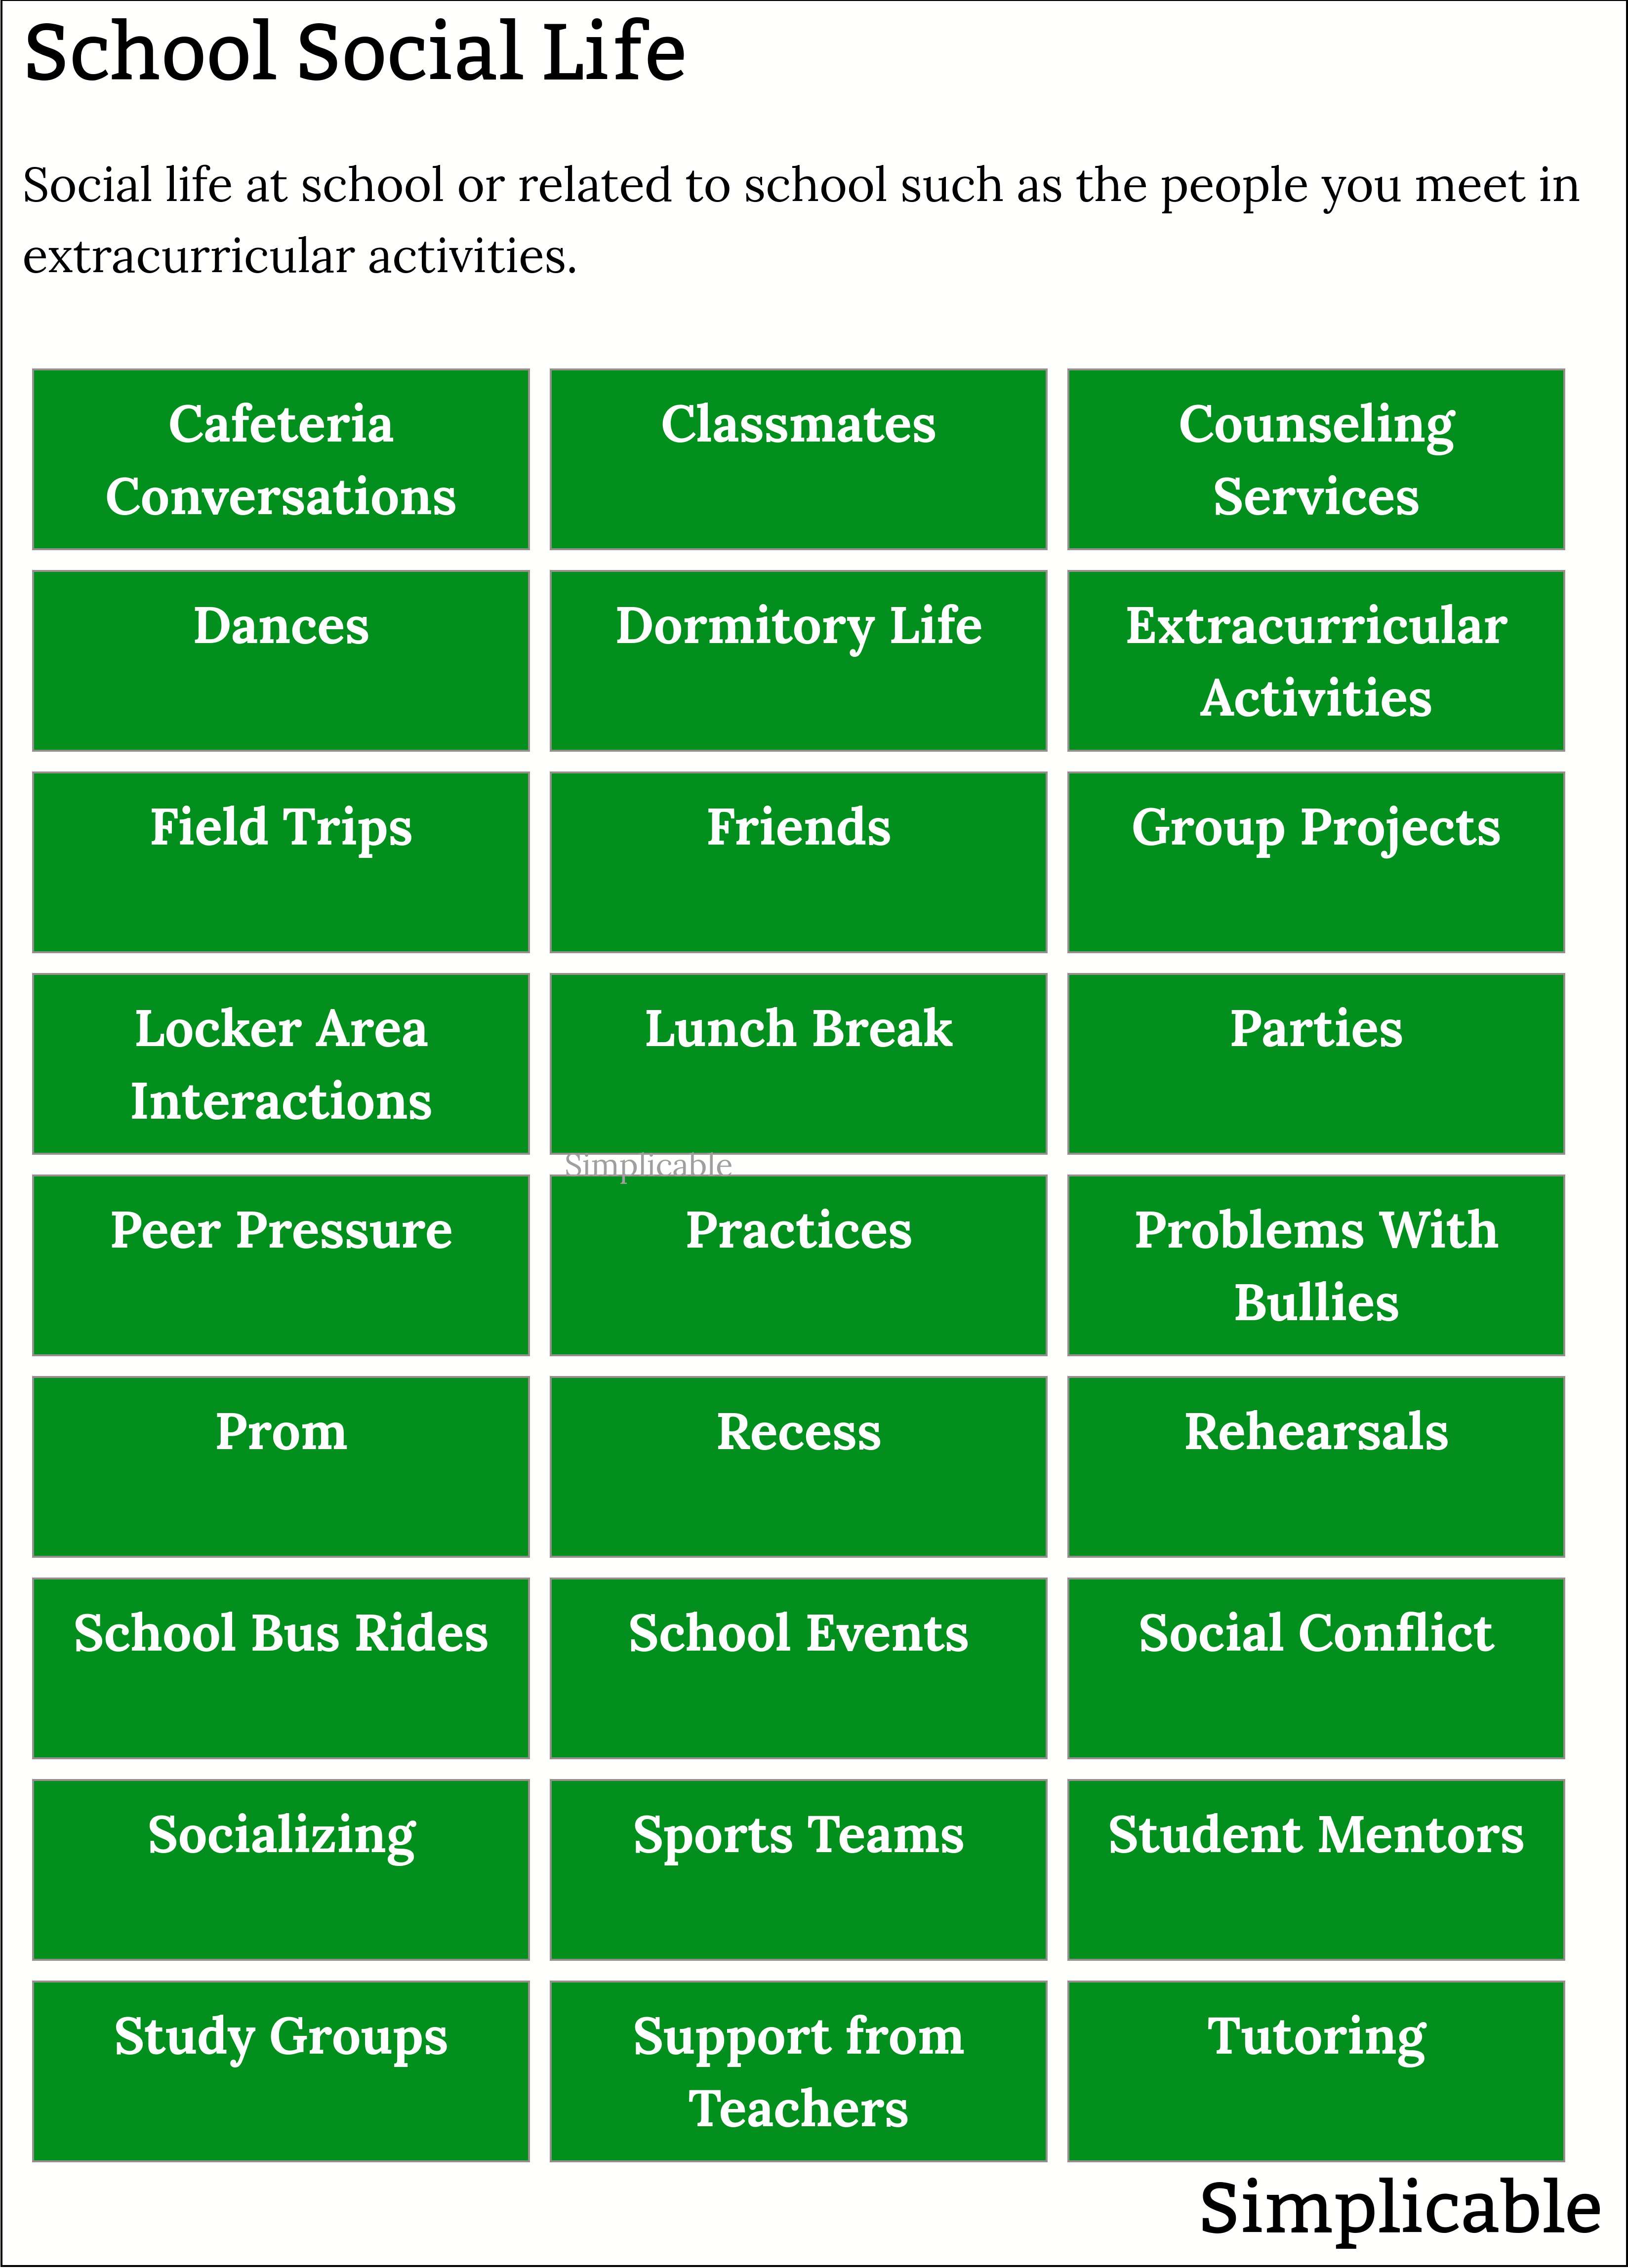 examples of school social life